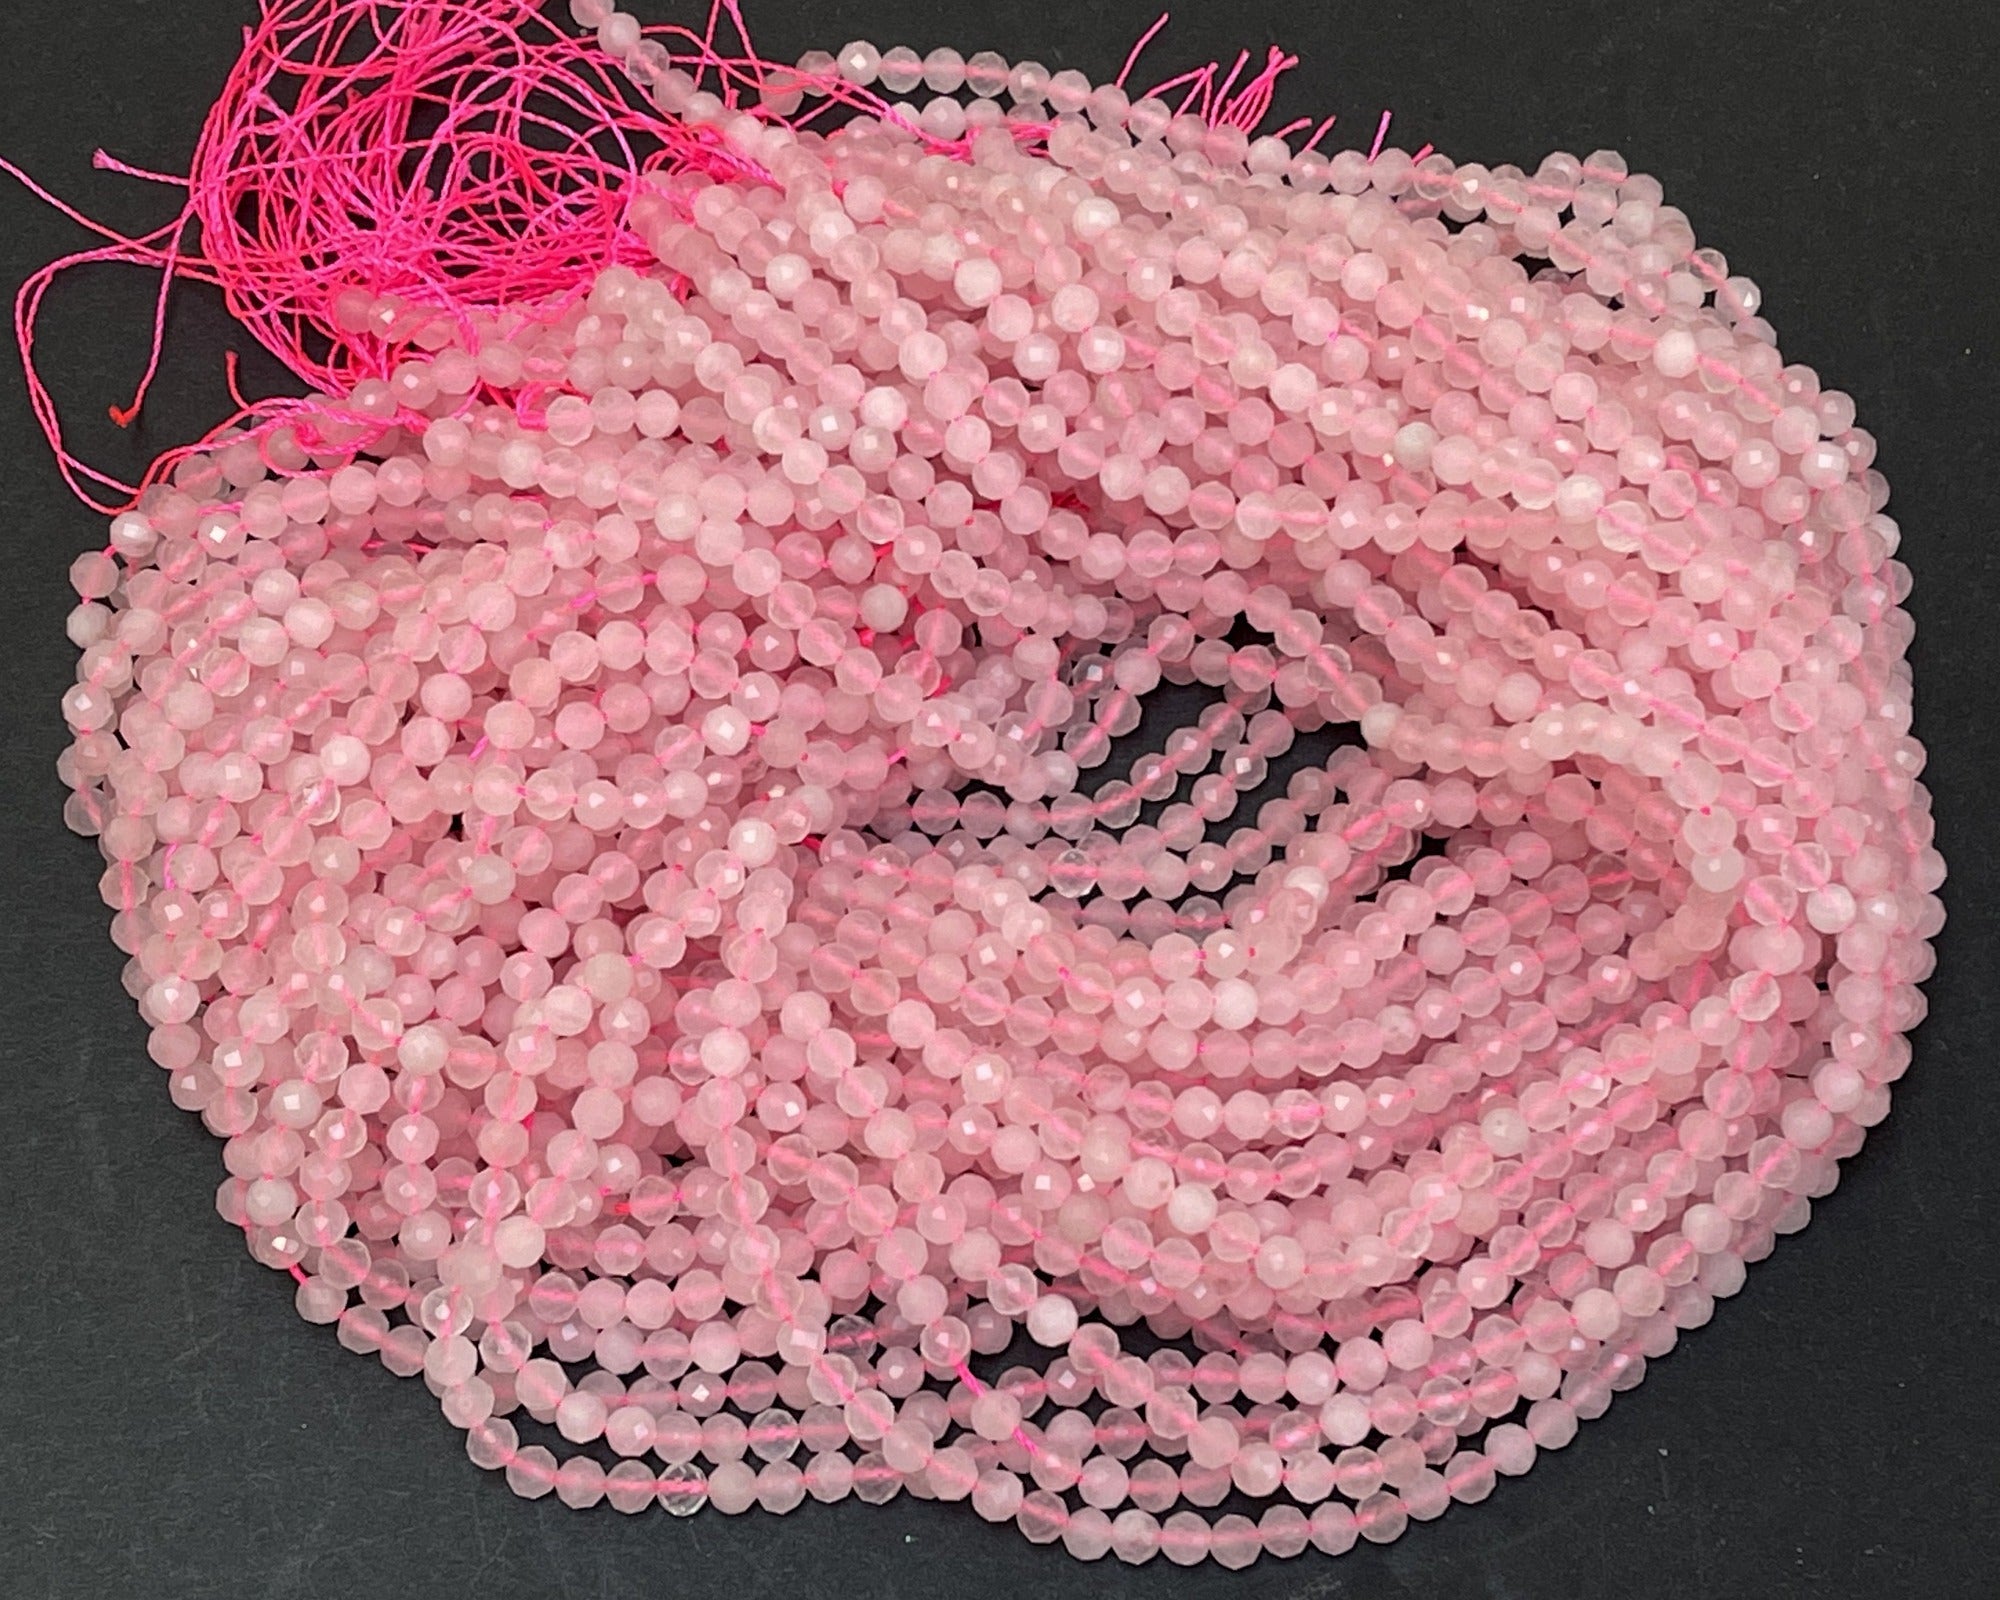 Rose Quartz 3mm 4mm faceted round natural gemstone beads 15.5" strand